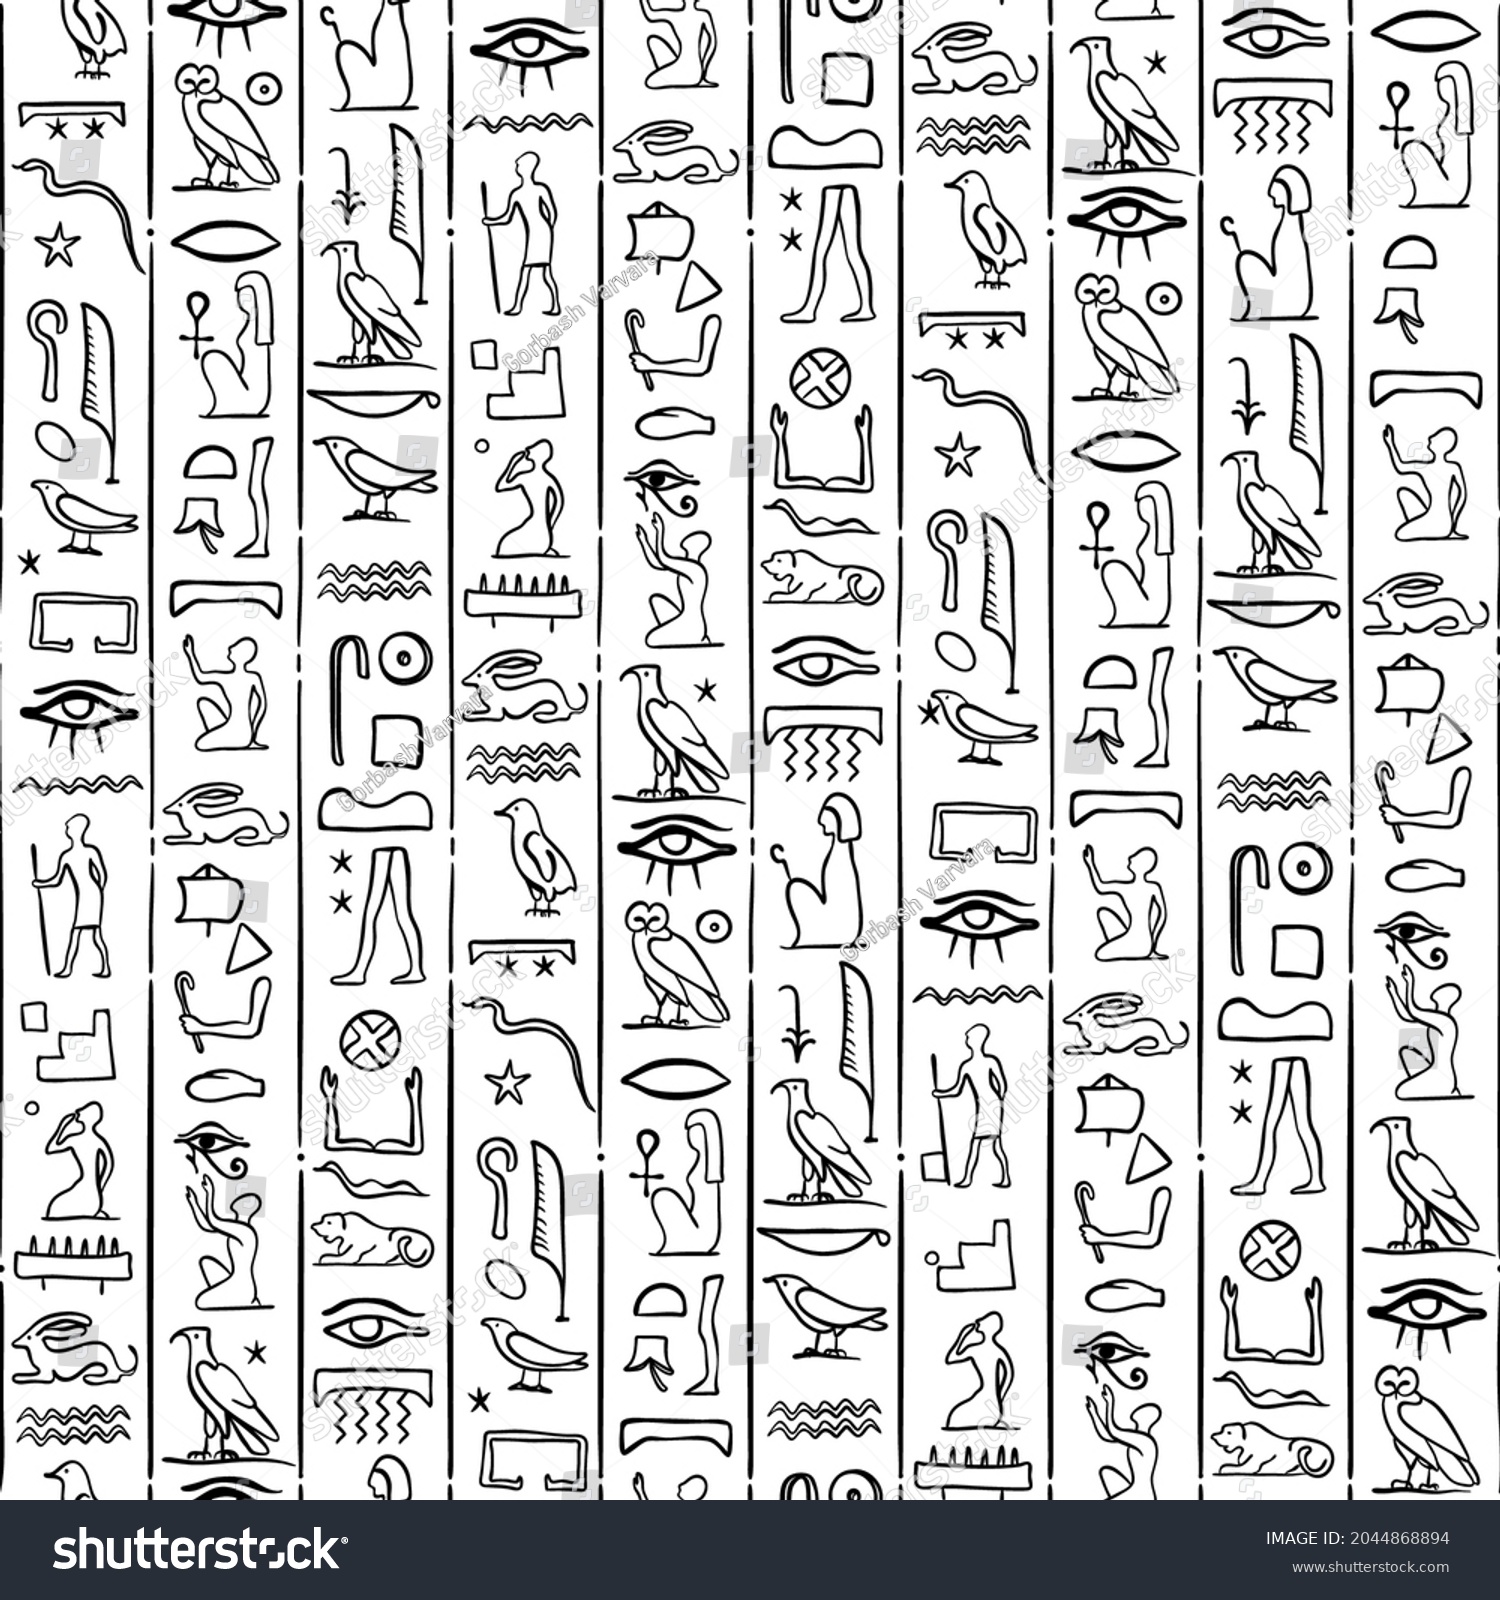 Egypt seamless pattern